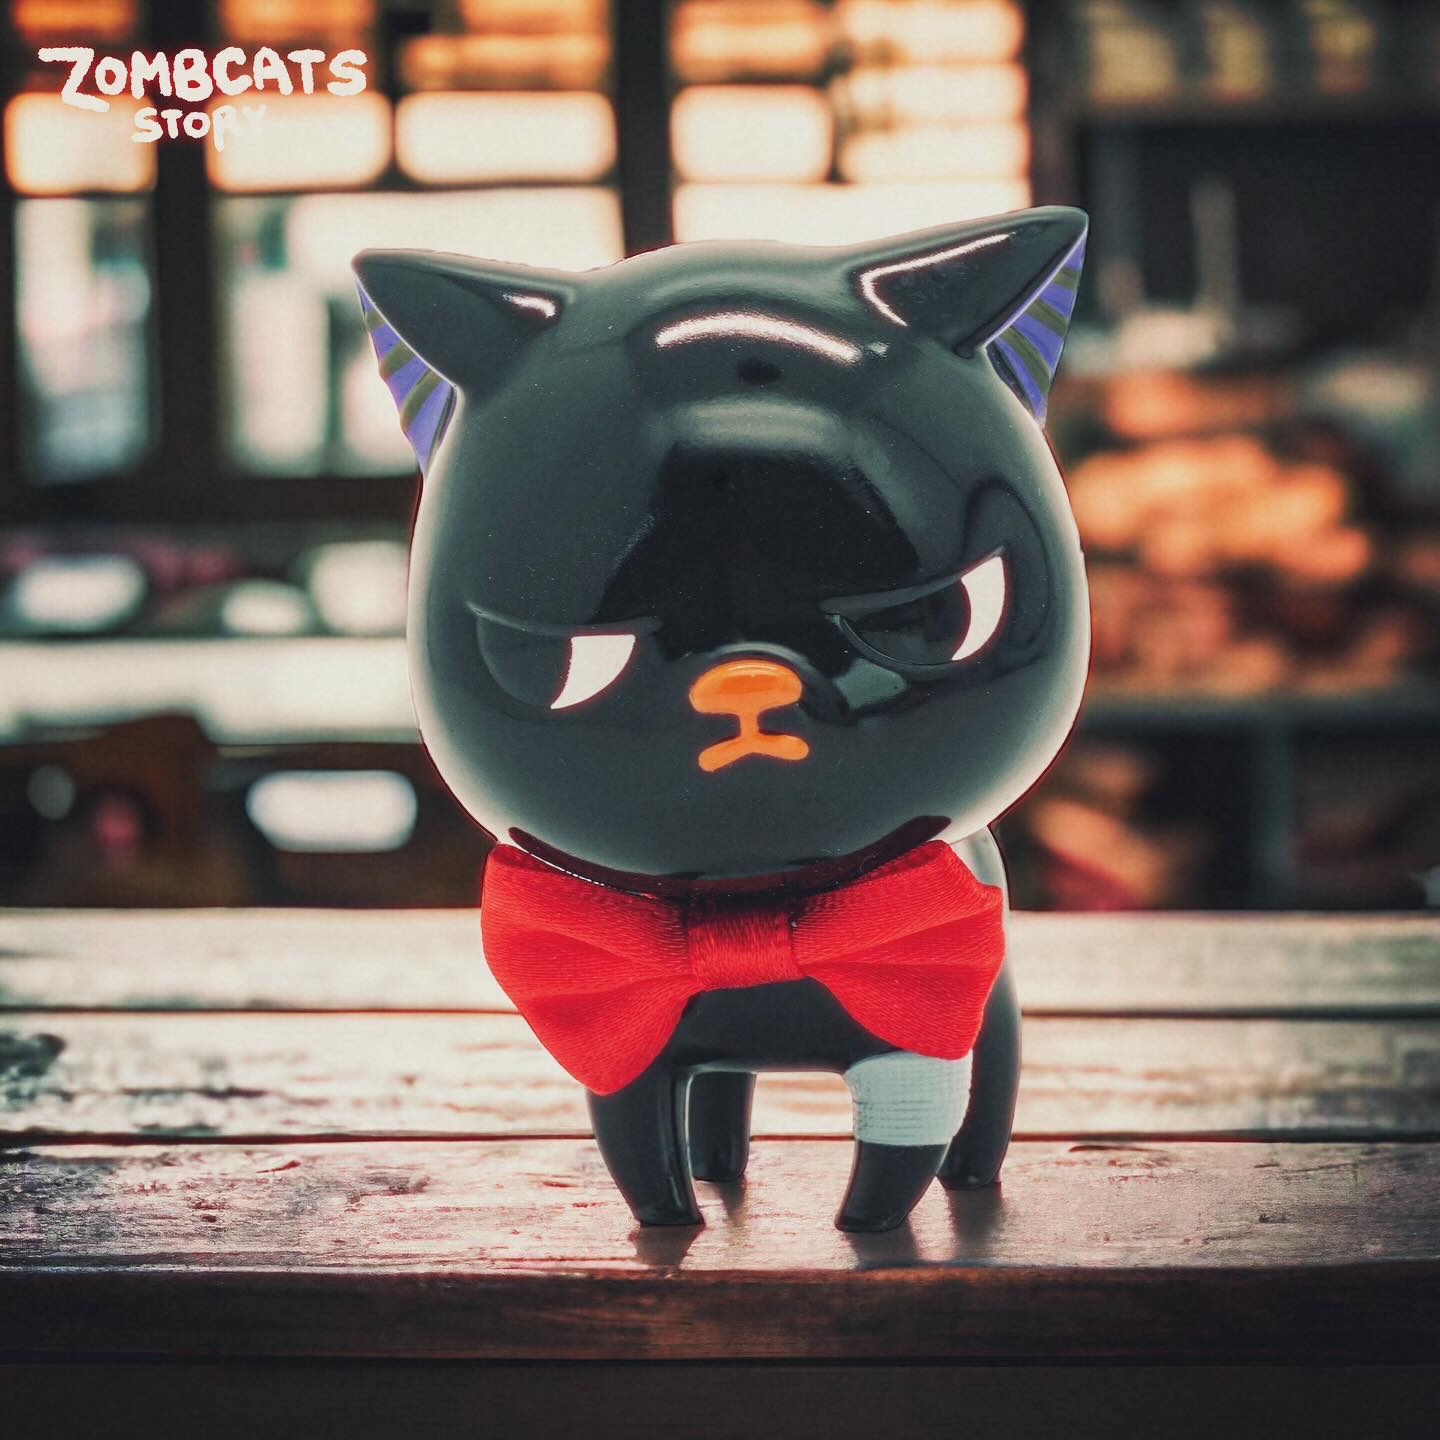 Nekomume - Kiki & Zombcats Story - Kurotsu2 by Morimei: Cartoon cat toy with red bow tie, limited edition, 7cm.